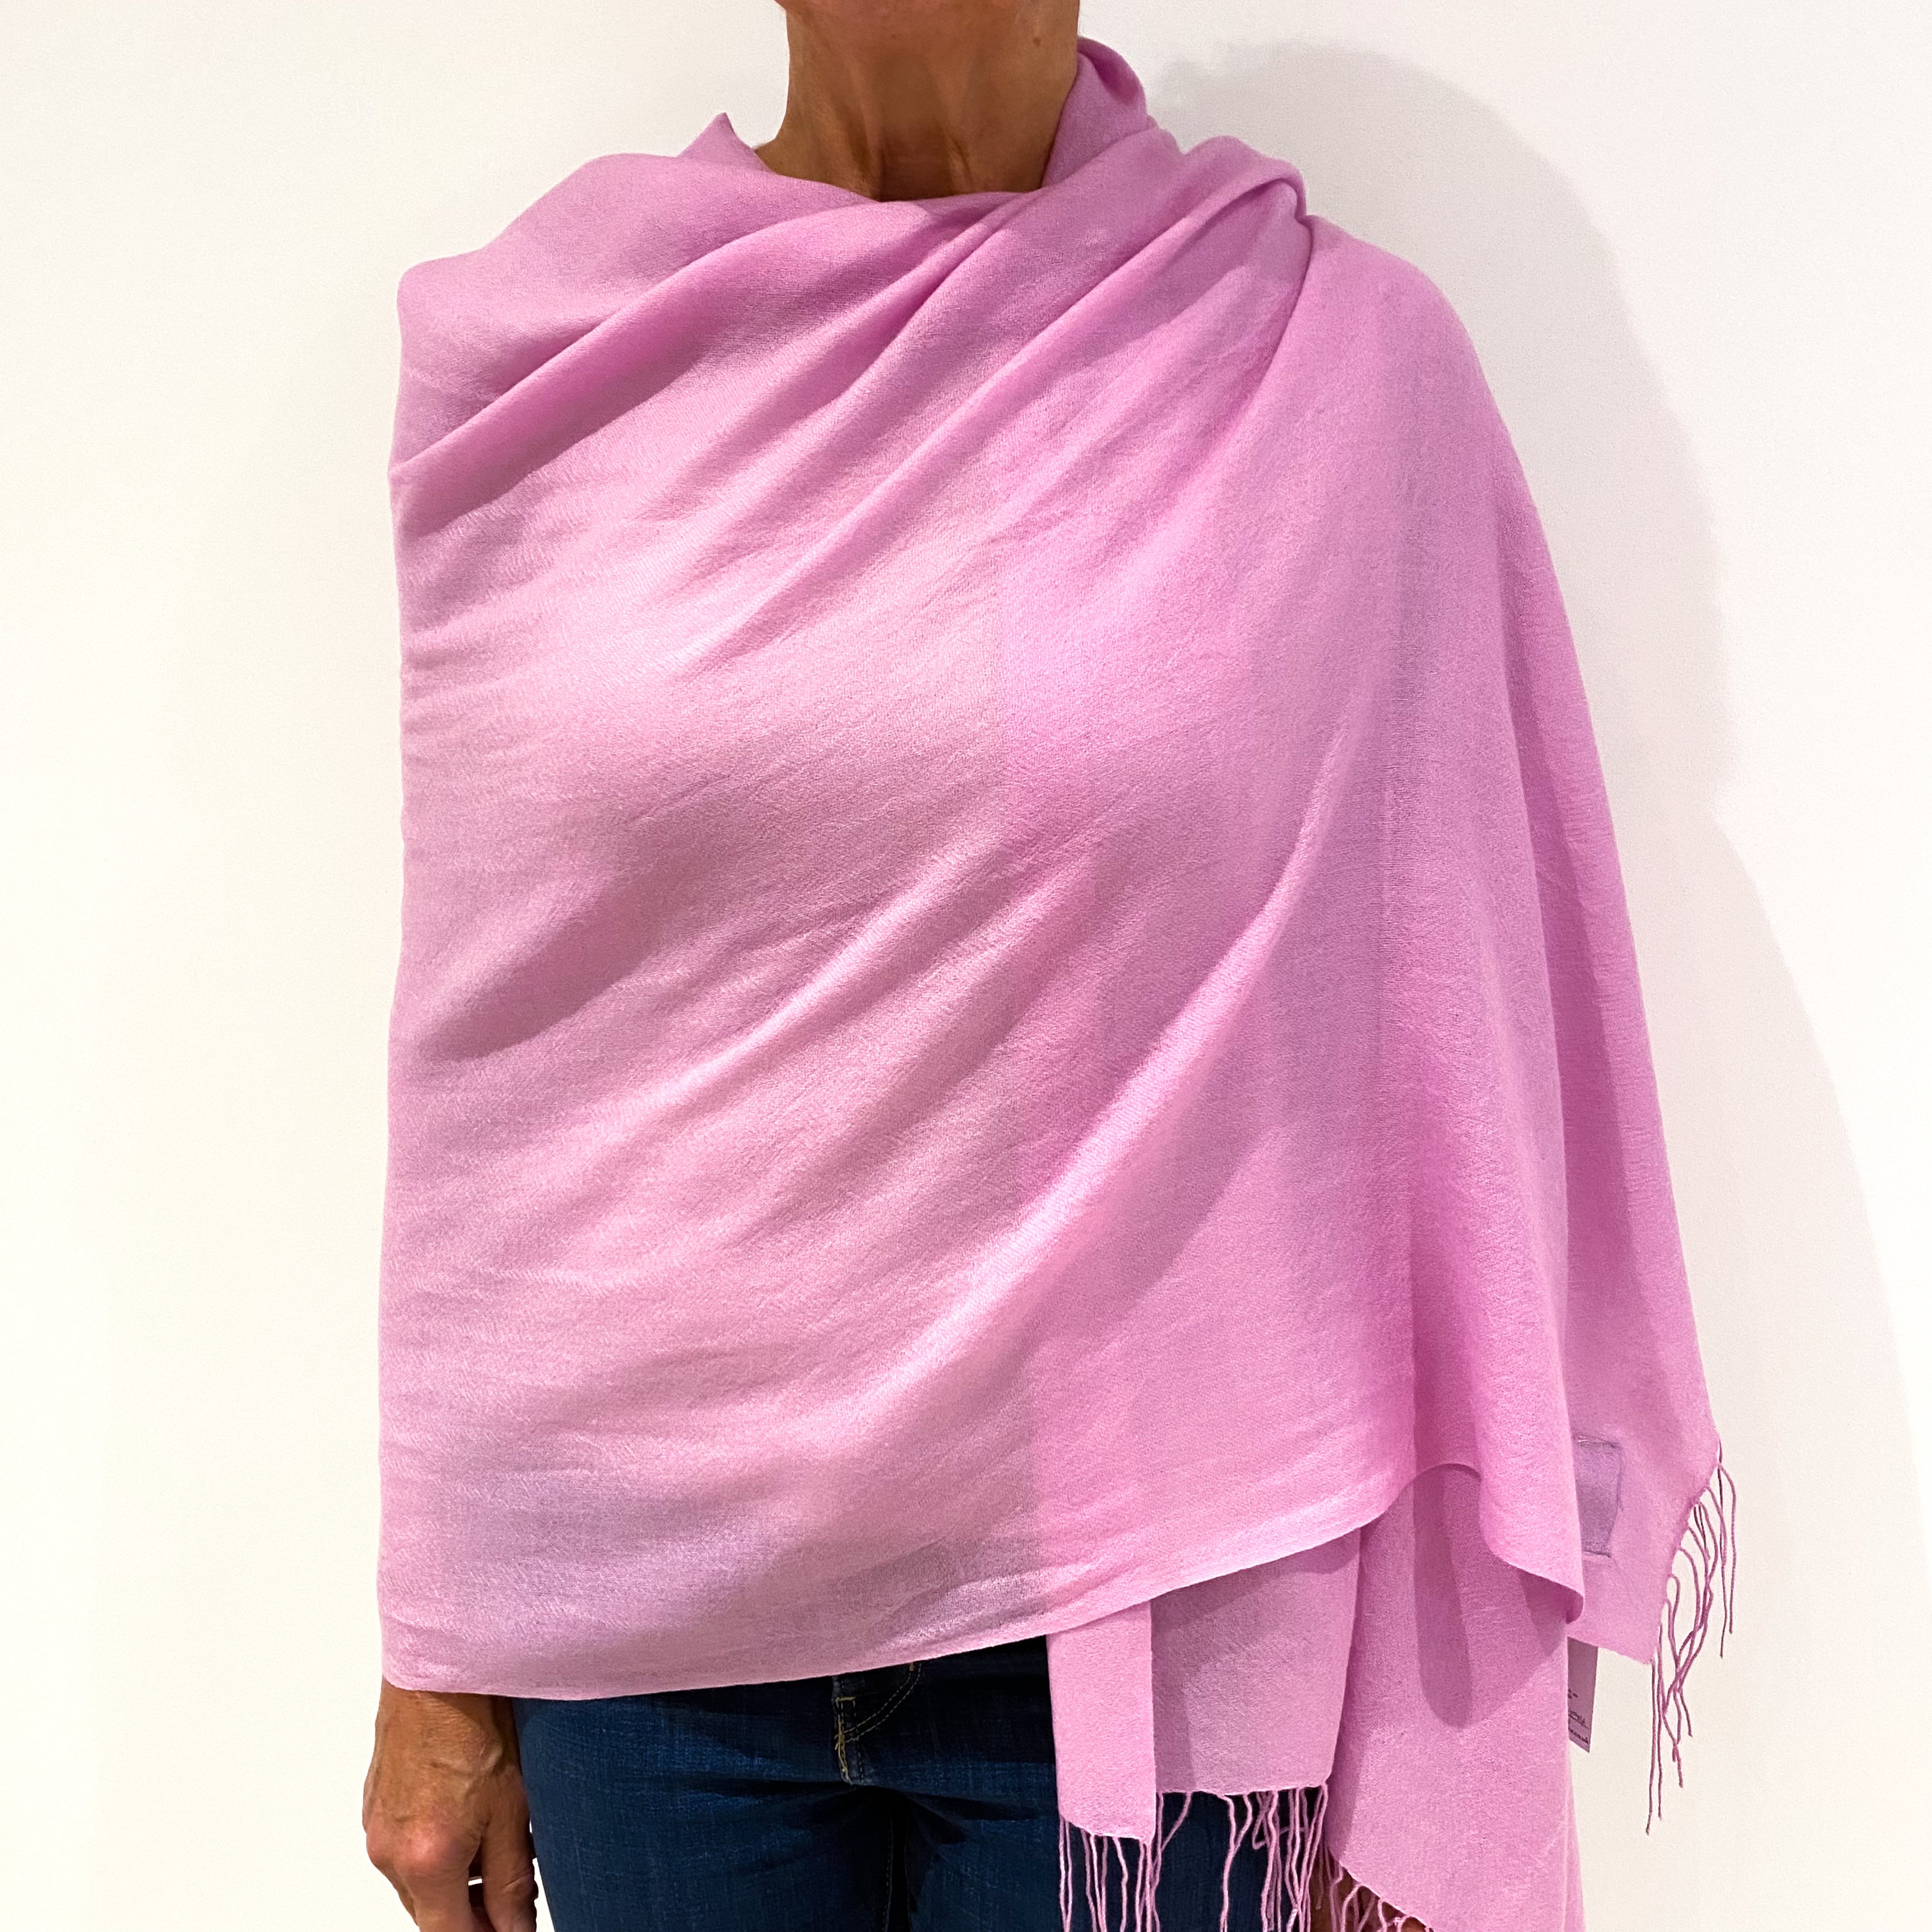 Brand New Mauve Pink Cashmere Pashmina Scarf